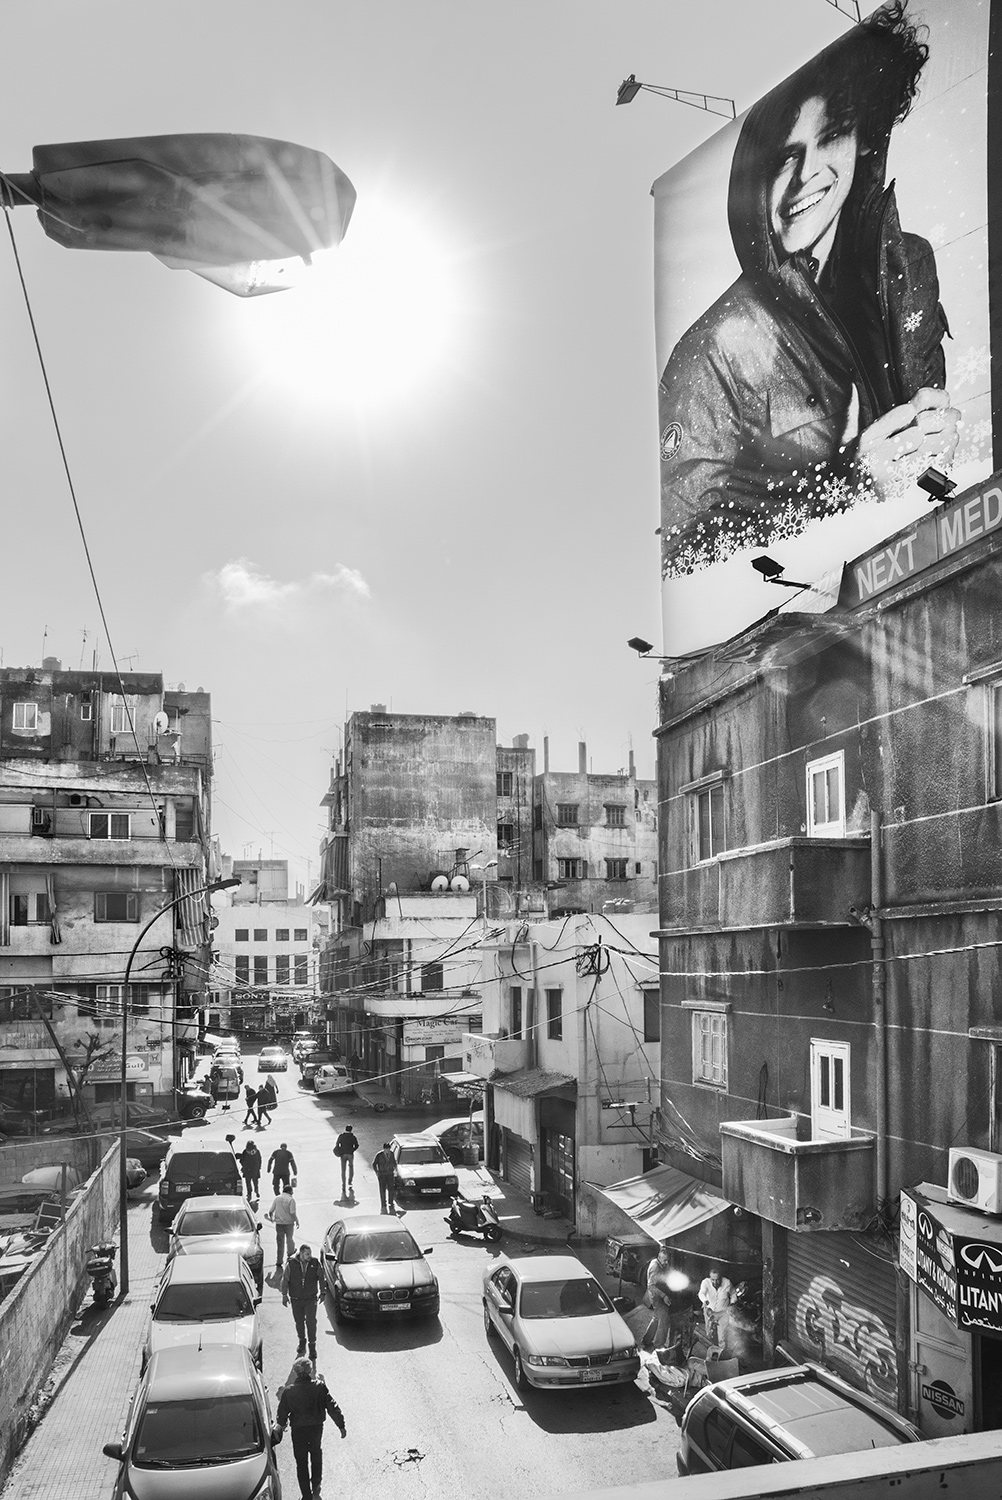   Next . Beirut, Lebanon, 2018  Archival Fiber Inkjet Print  24 x 16 inches 